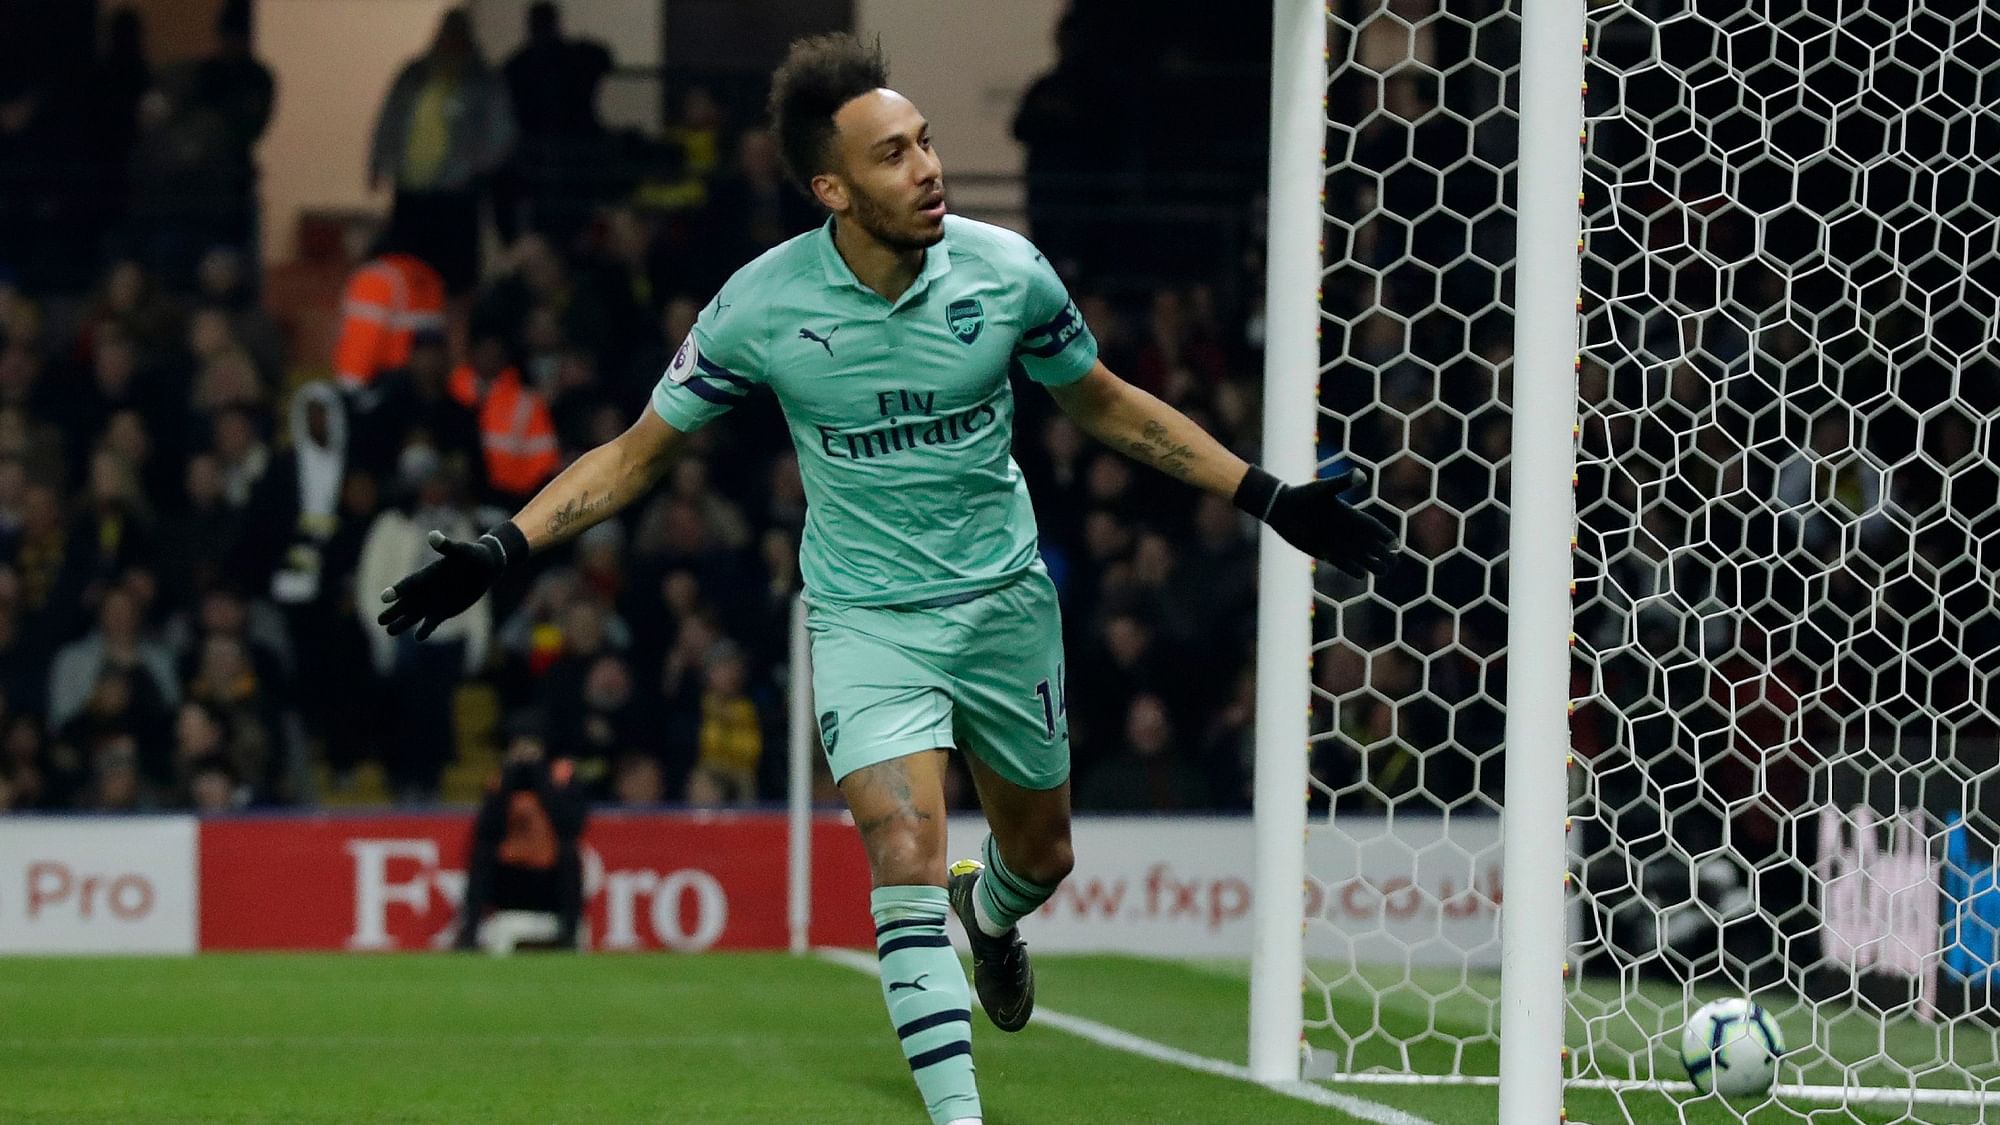 Arsenal’s Pierre-Emerick Aubameyang celebrates after scoring the opening goal against Watford.